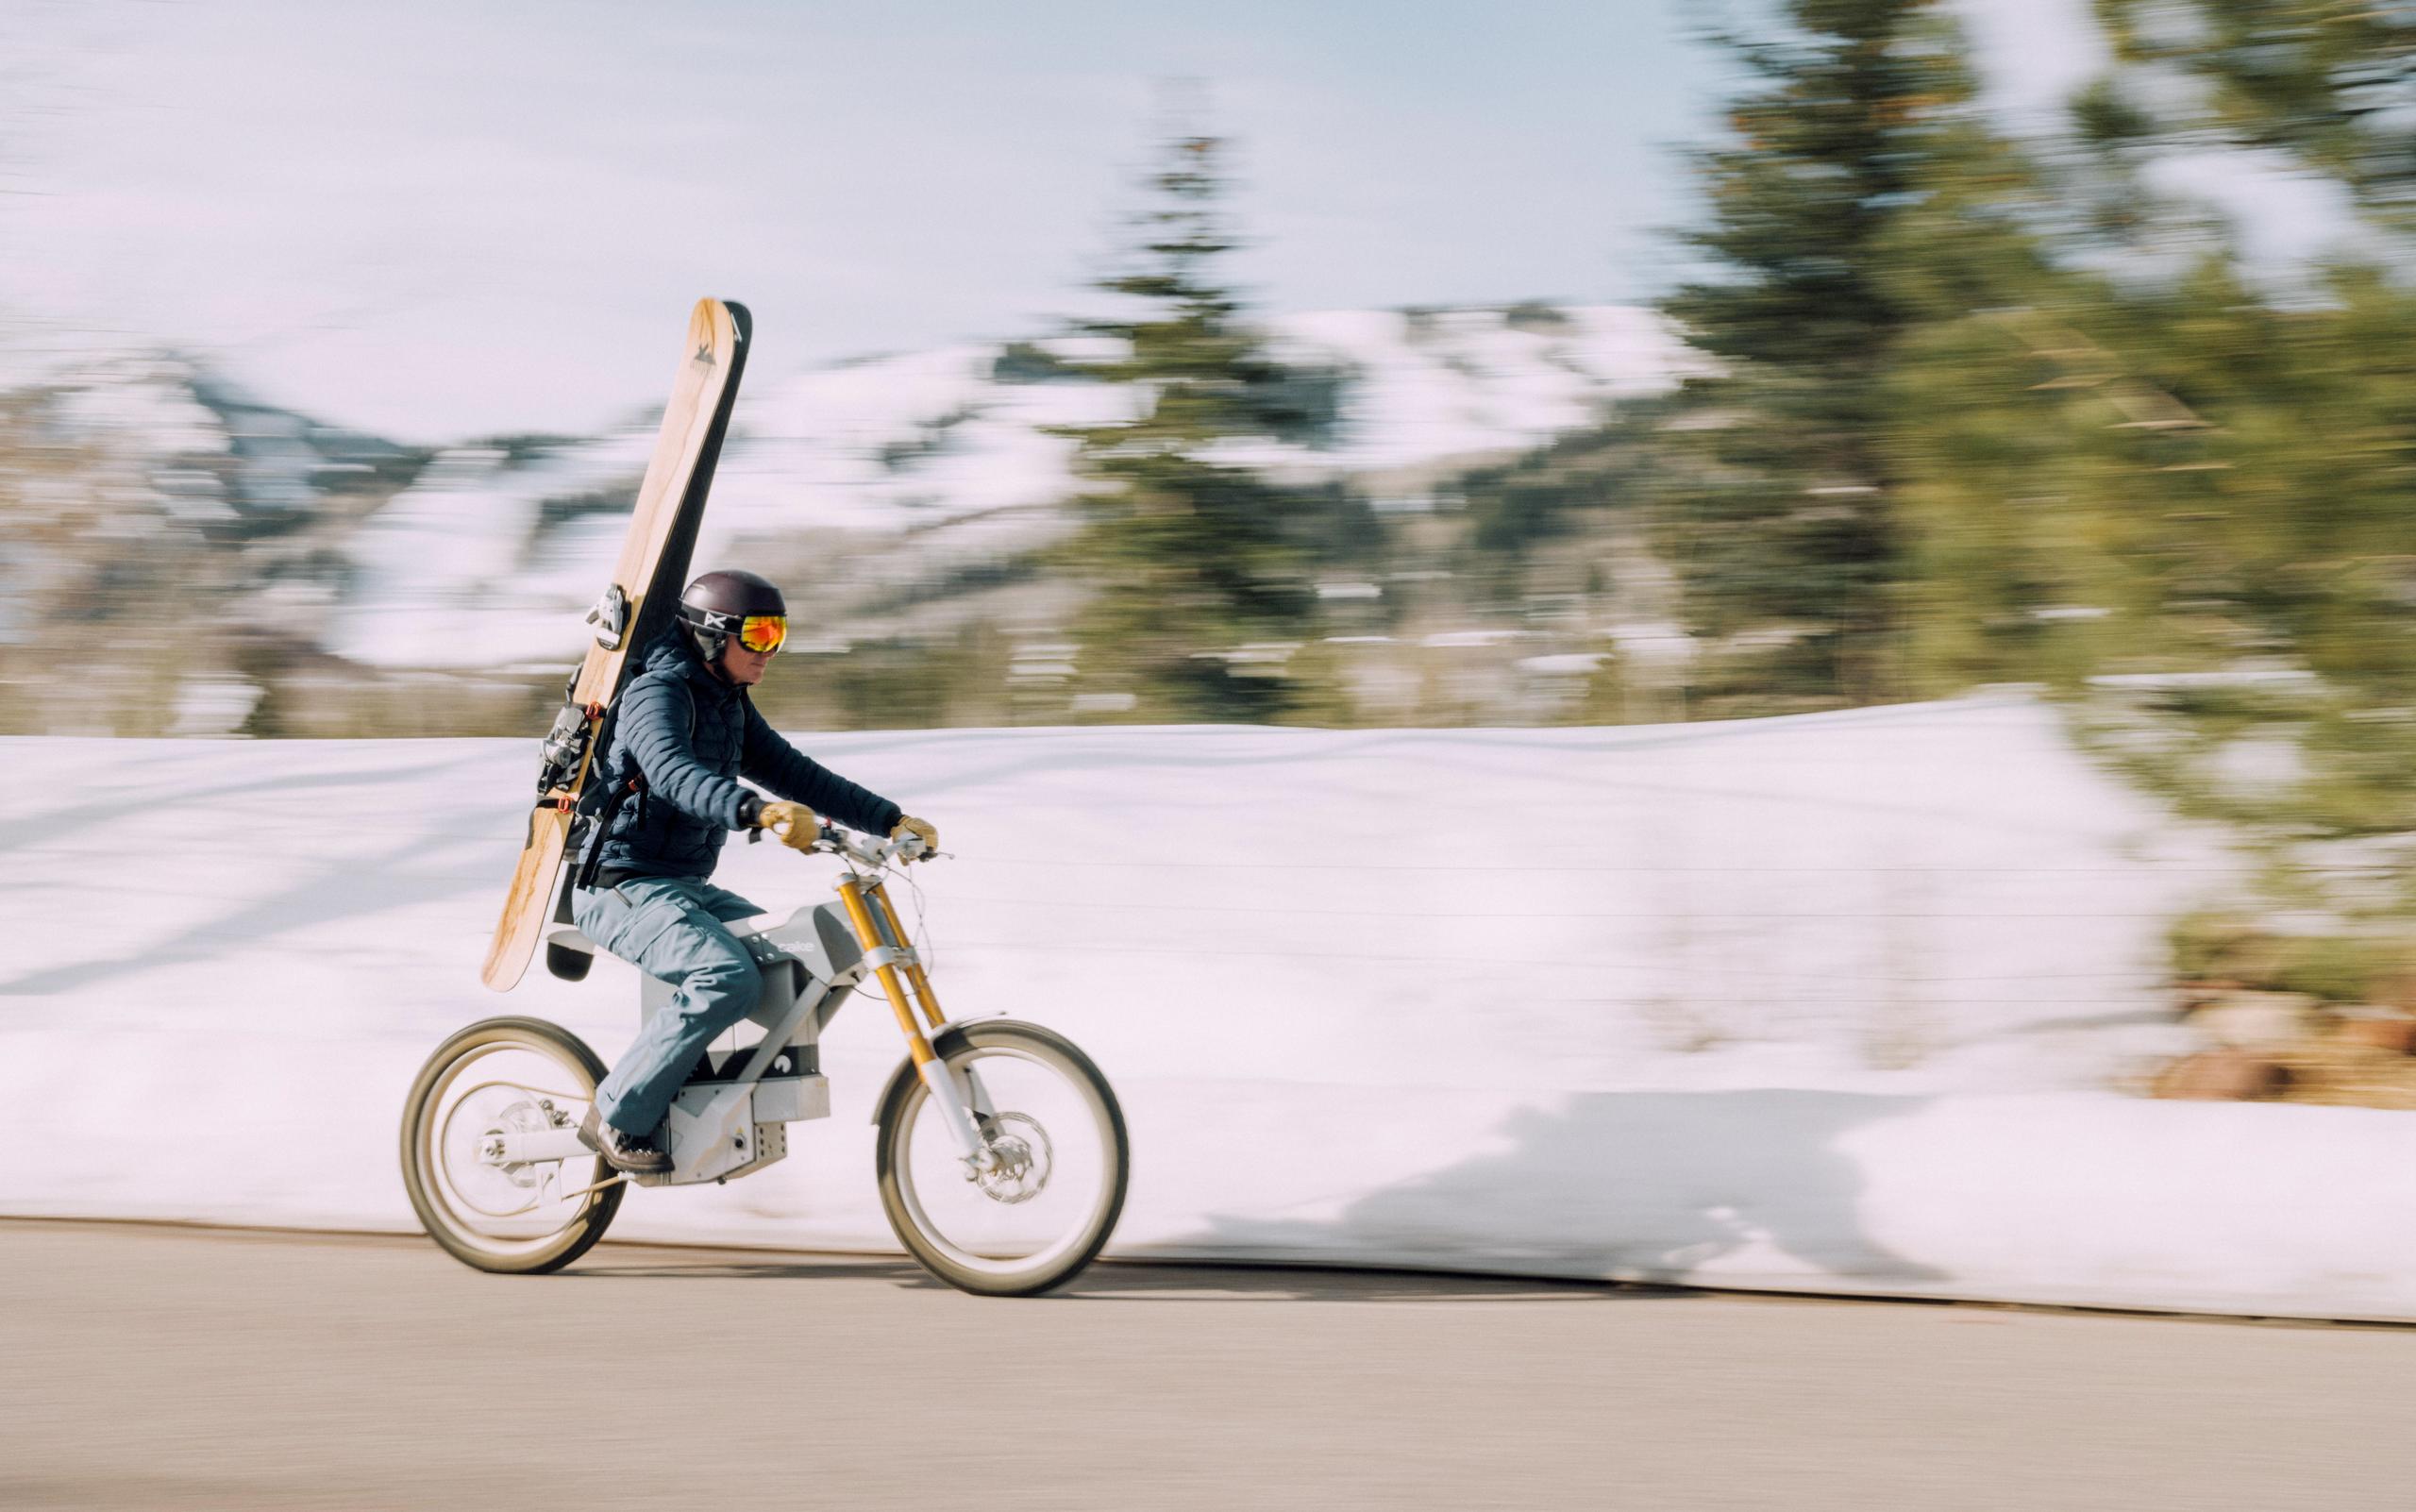 Men wearing Explore Snow Pant on cake bike heading to ski